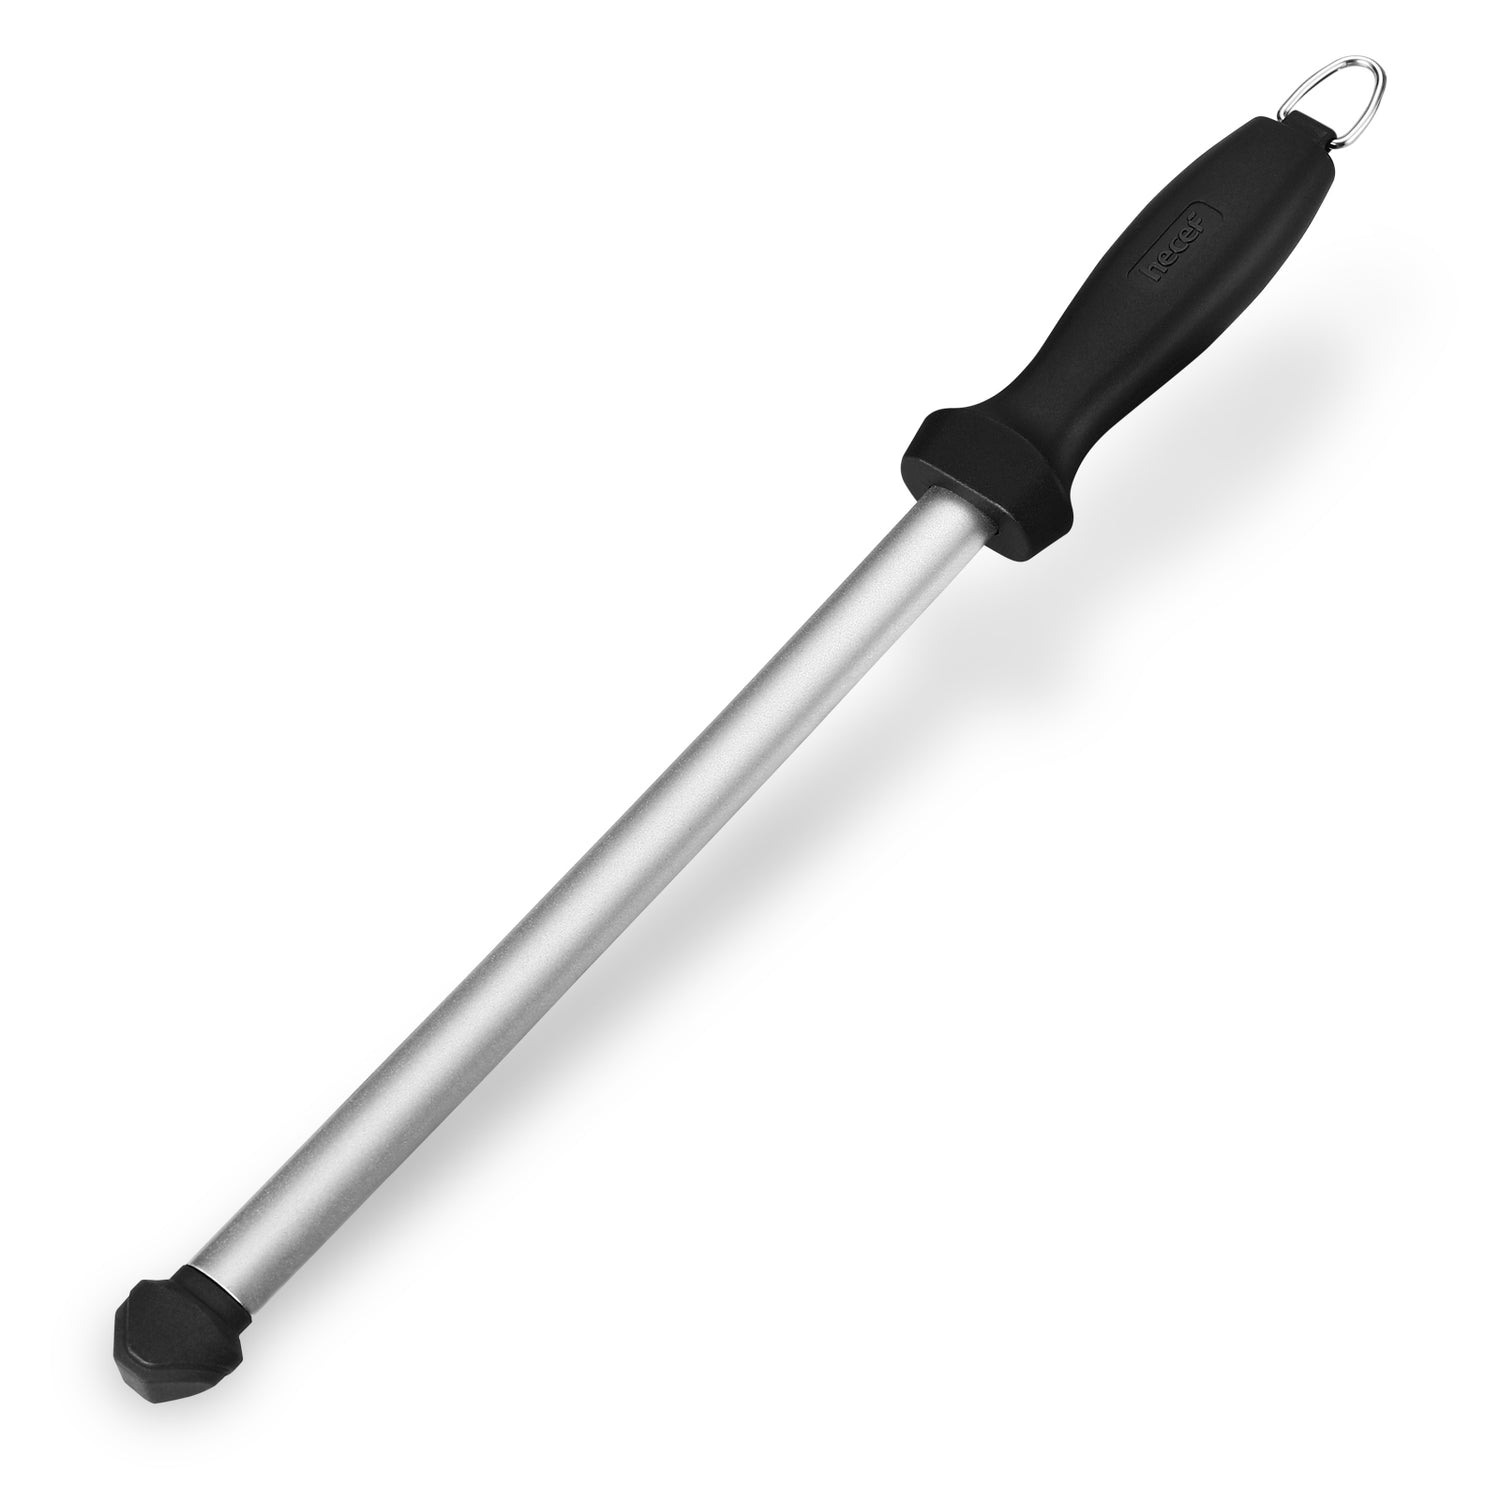 UberSchnitt Carbon Steel 10 Inch Knife Honing Rod + Knife Guard Complete Kit